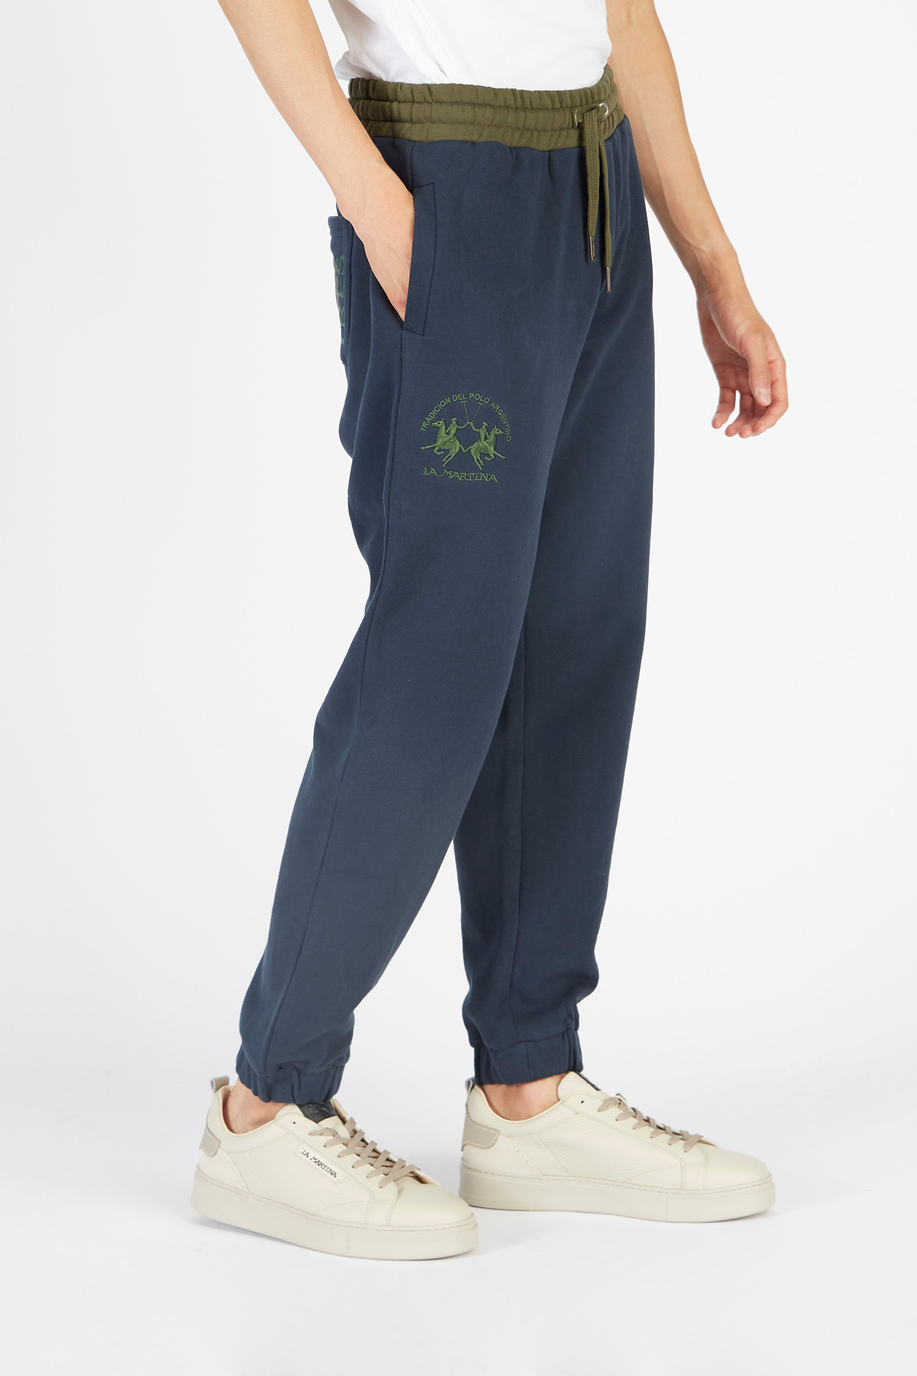 Comfort fit cotton jogger trousers for men - Clubhouse outfits | La Martina - Official Online Shop